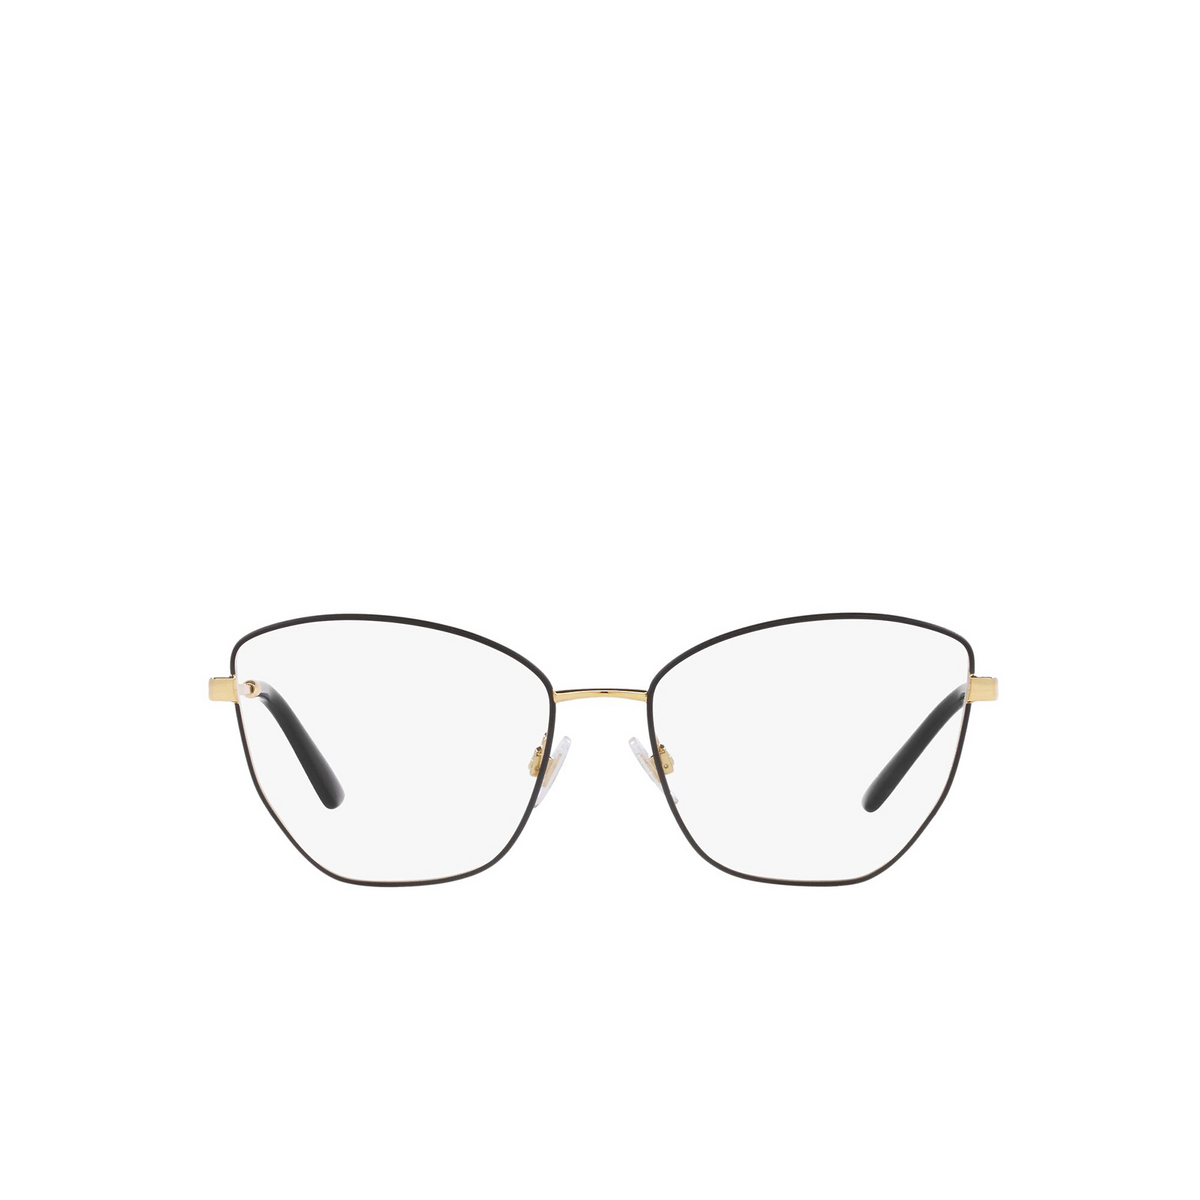 Dolce & Gabbana® Butterfly Eyeglasses: DG1340 color Gold / Matte Black 1311 - front view.